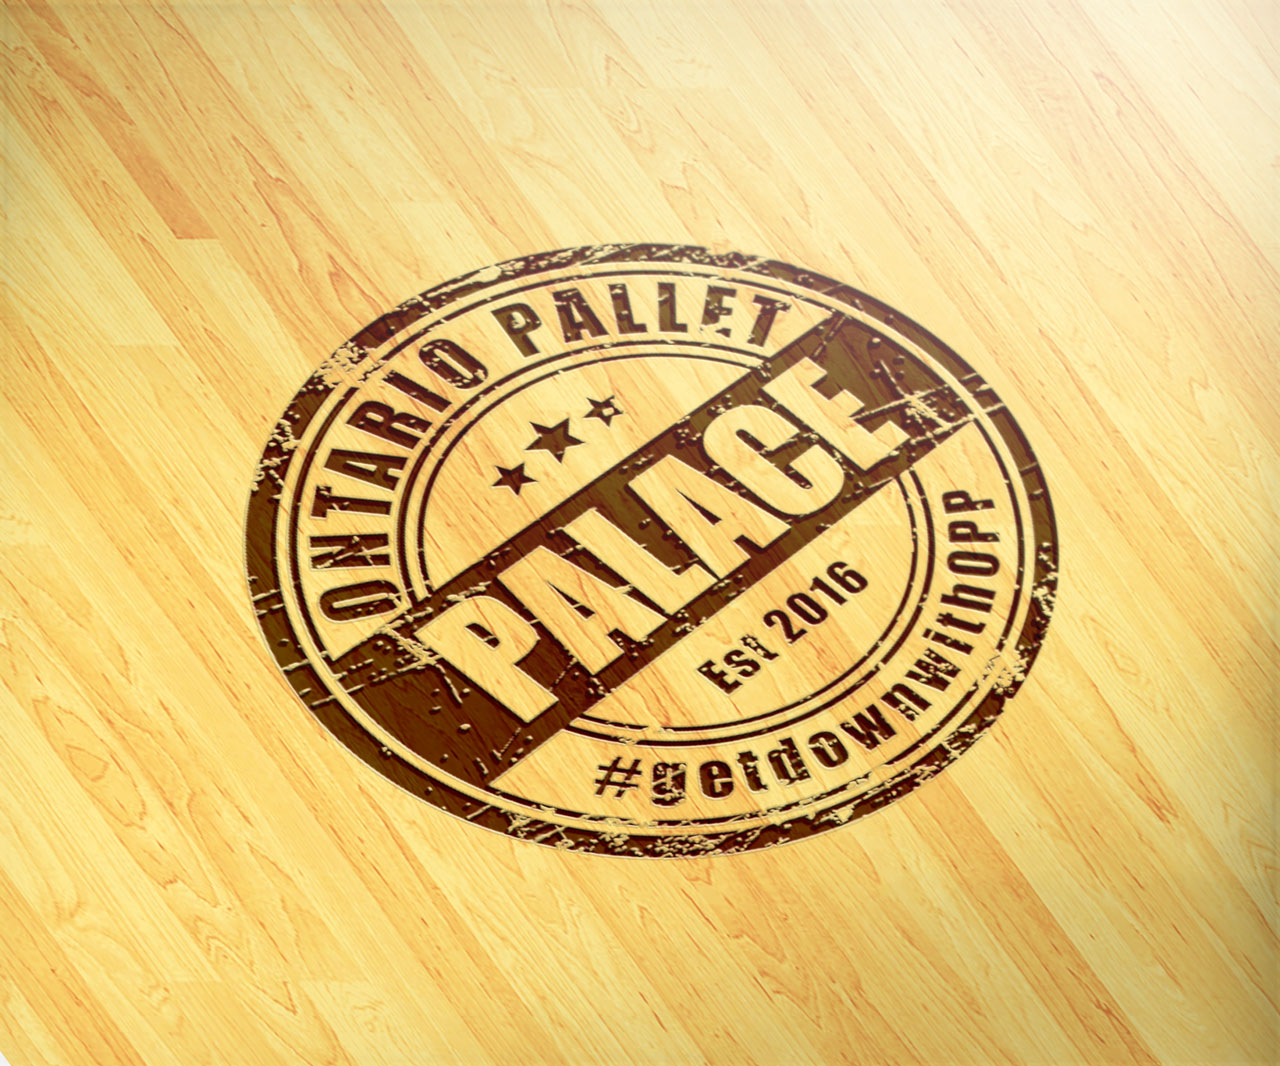 Ontario pallet palace logo design by scr enter dibyendu roy rubber emblem on wooden surface mock up presentation